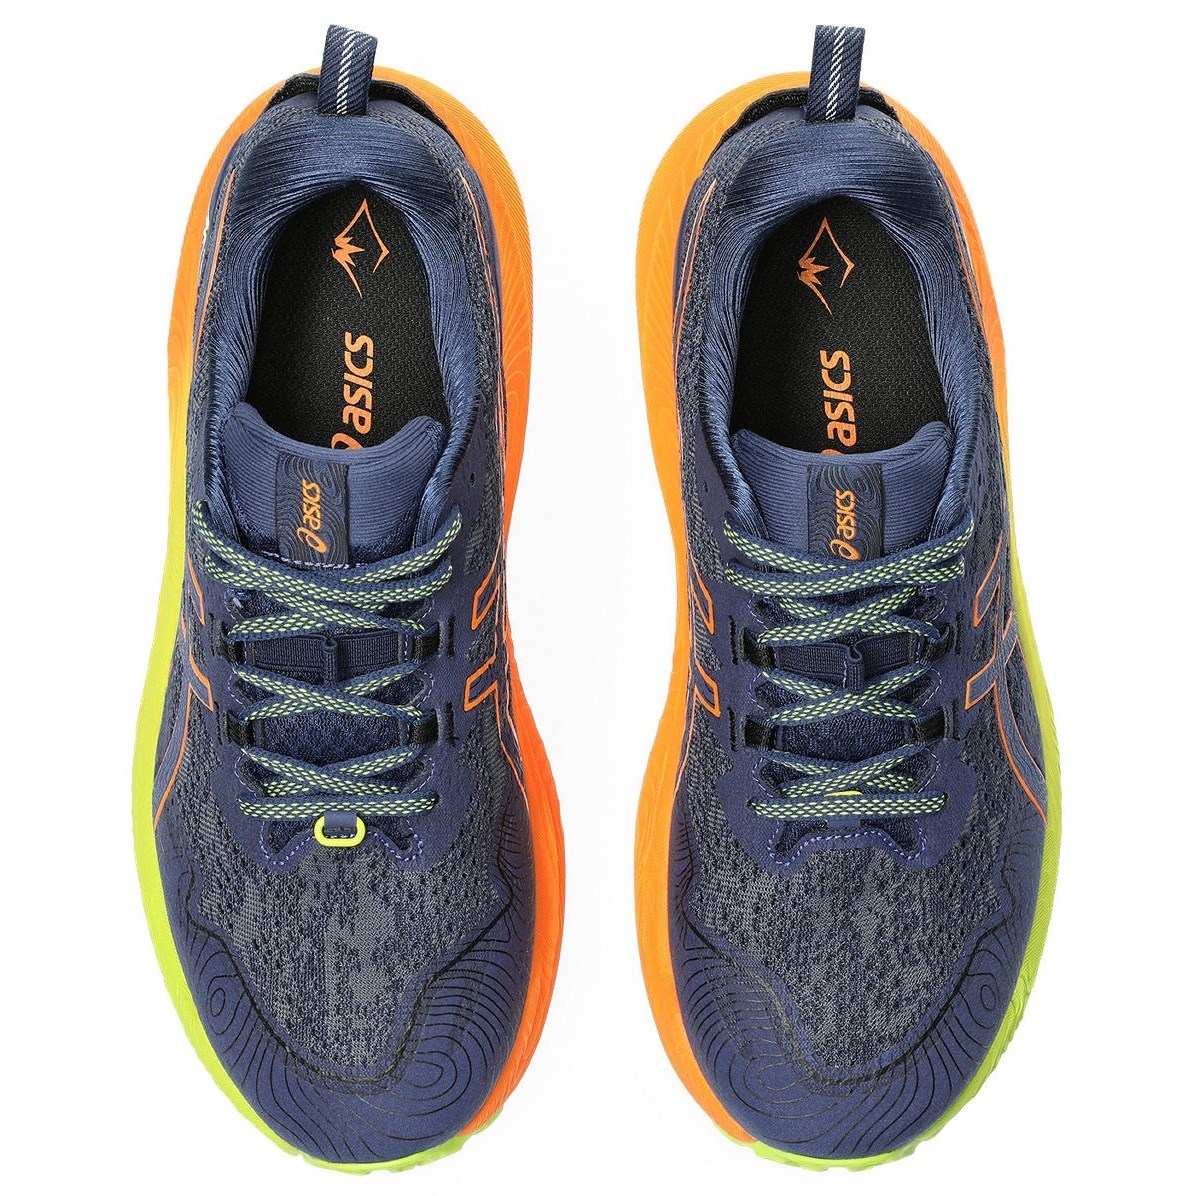 Asics Trabuco Max 2 - Mens Trail Running Shoes - Deep Ocean/Bright ...